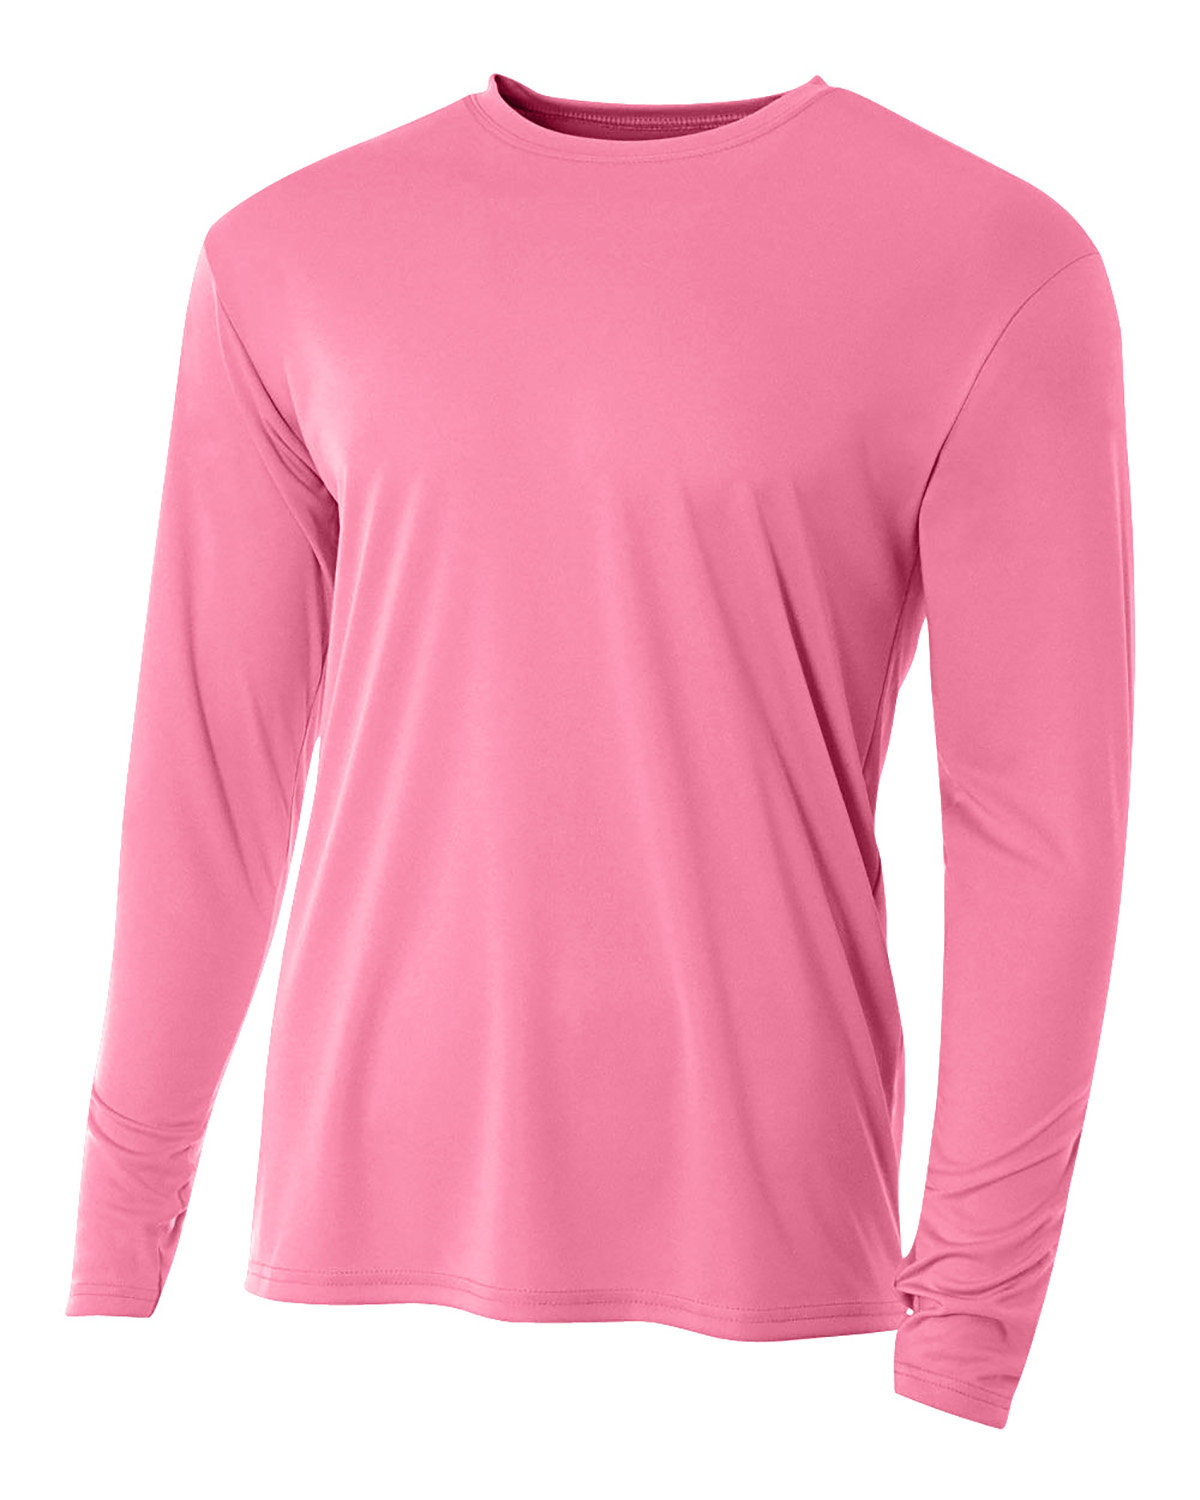 A4 Men's Cooling Performance Long Sleeve T-Shirt pink 